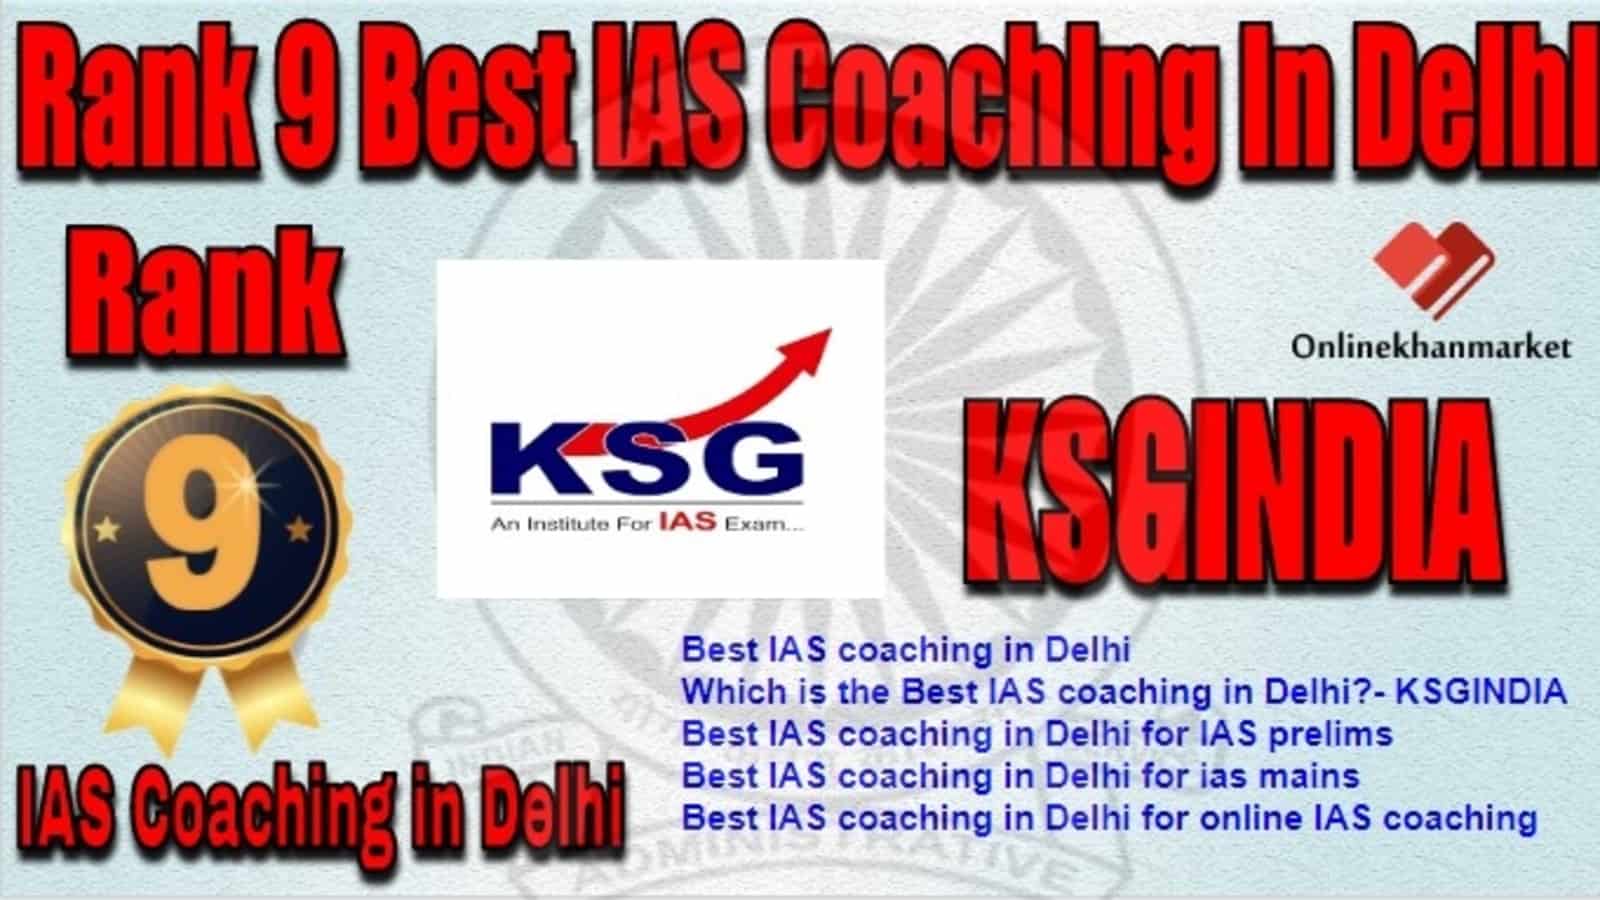 Rank 9 Best IAS Coaching in Delhi